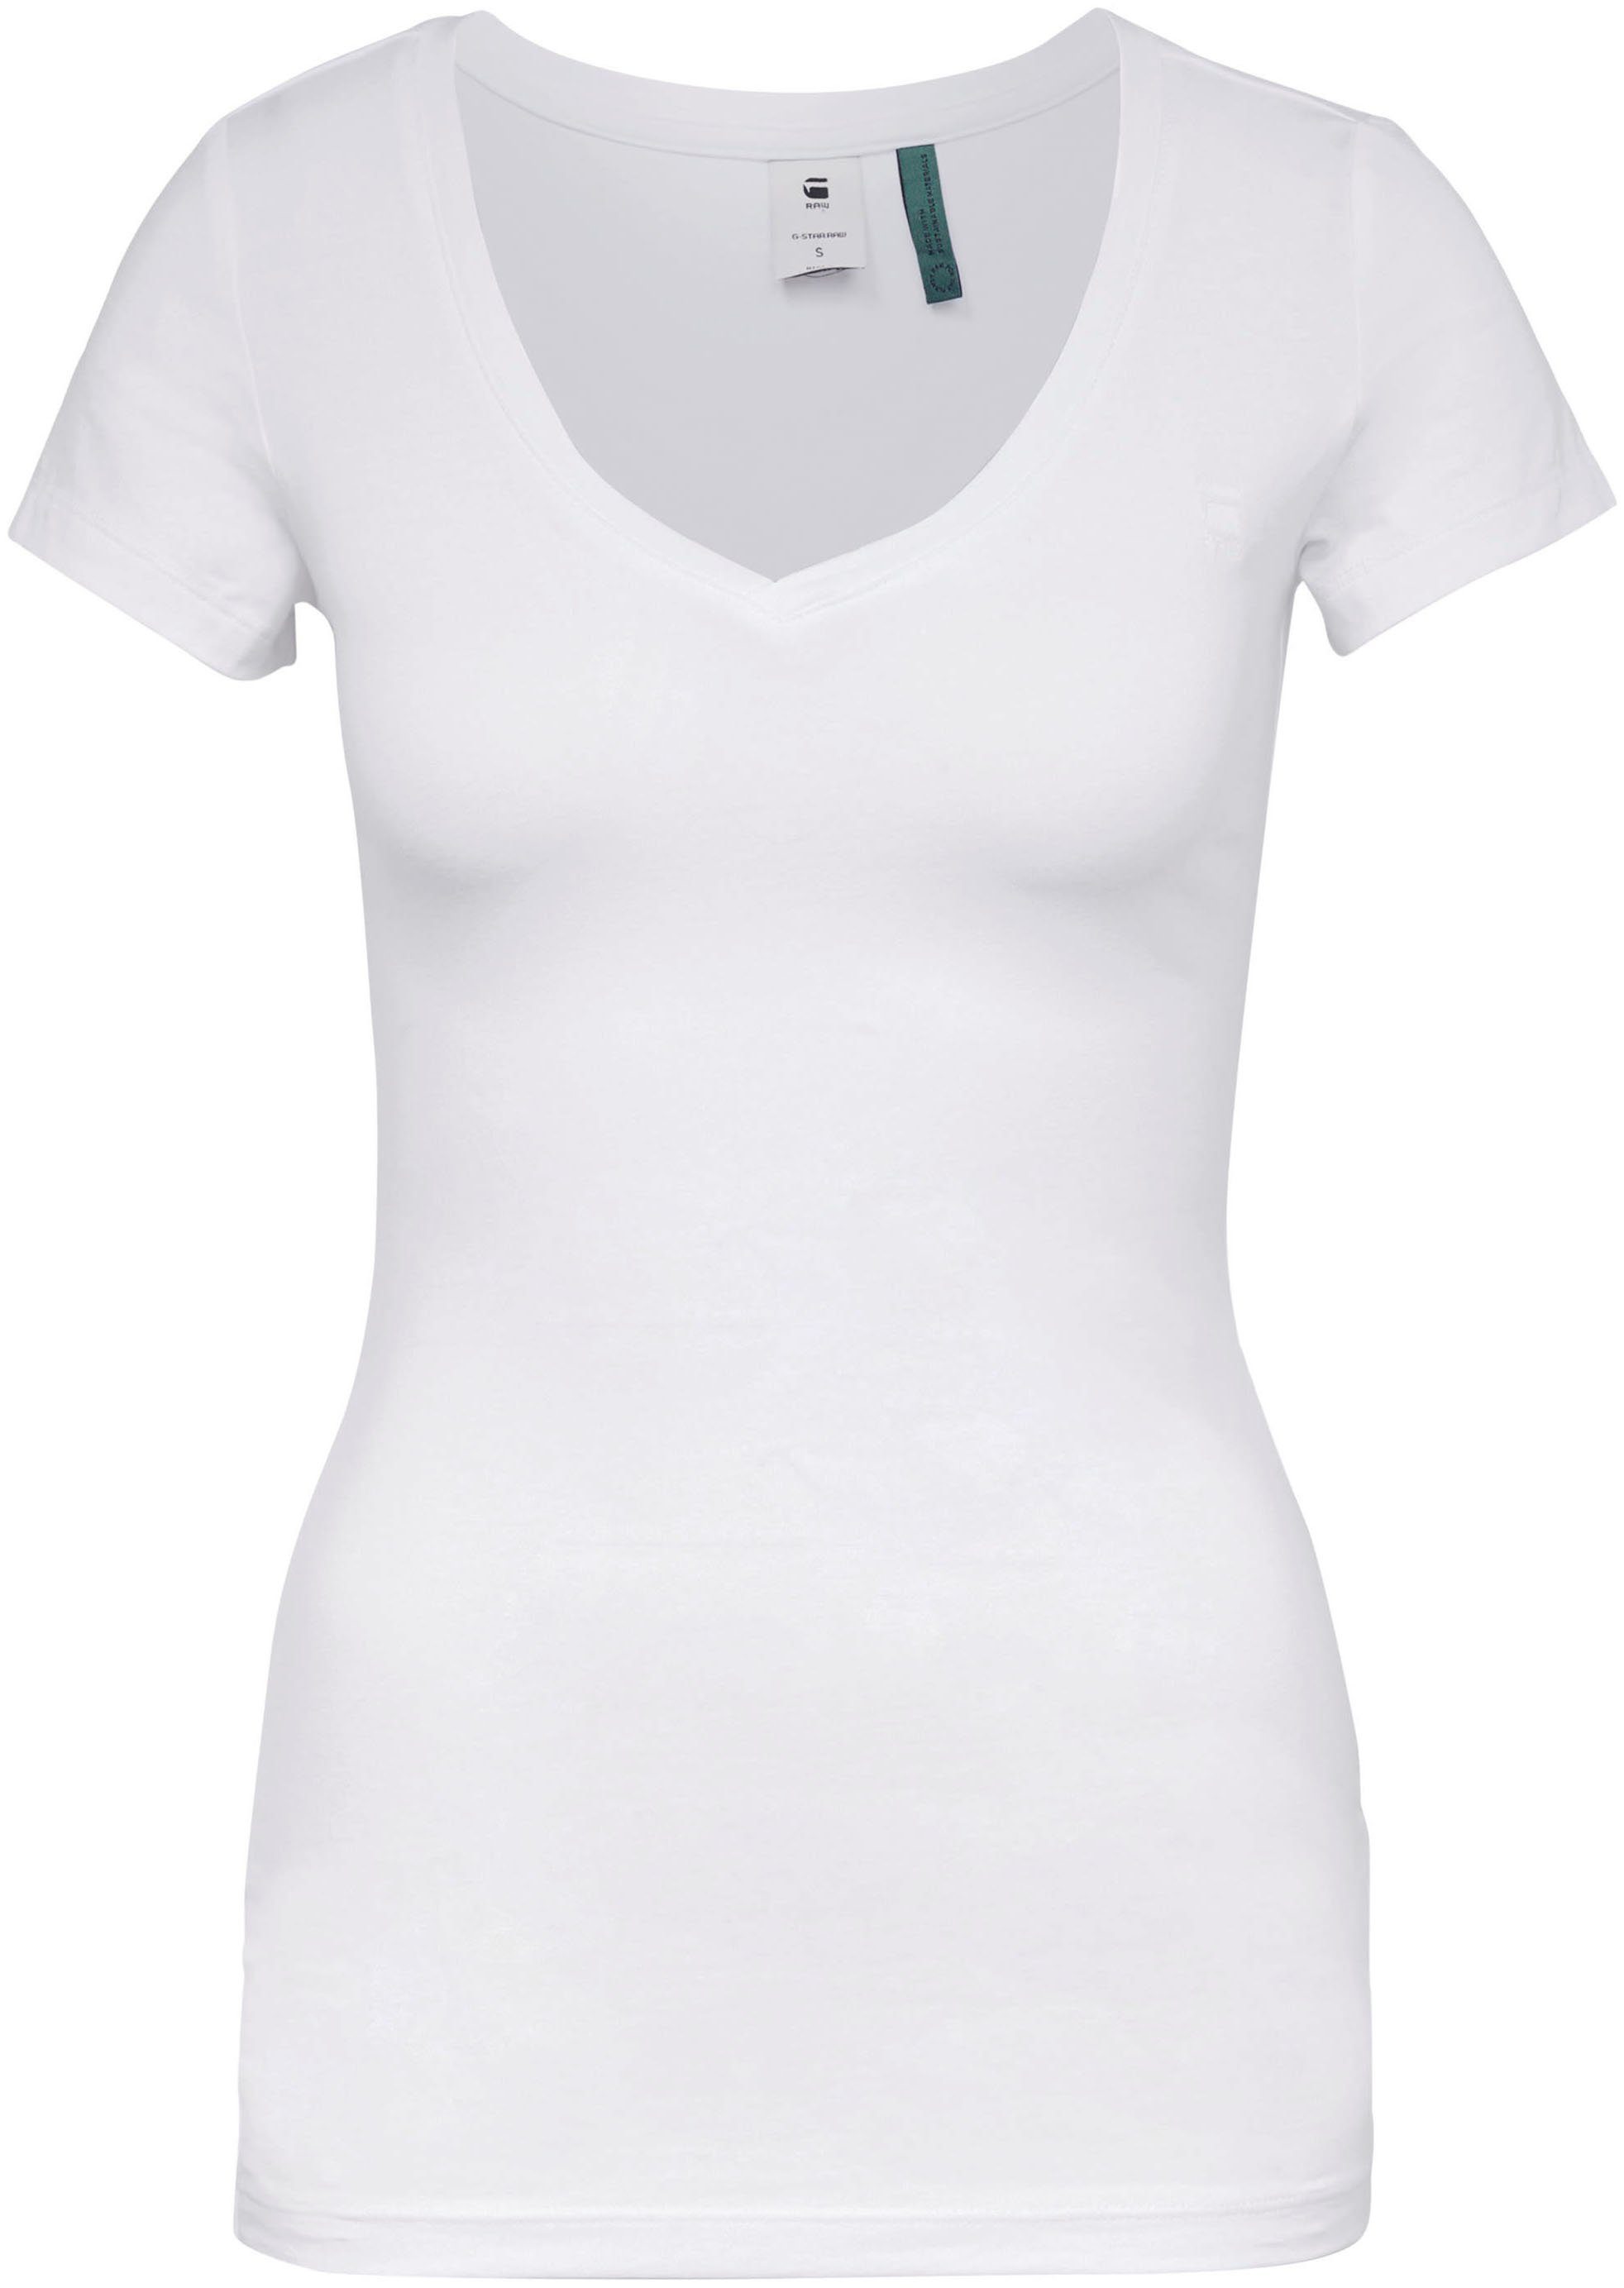 G-Star RAW V-Shirt Base v cap wmn kleinem Logodruck vorne mit t white sl